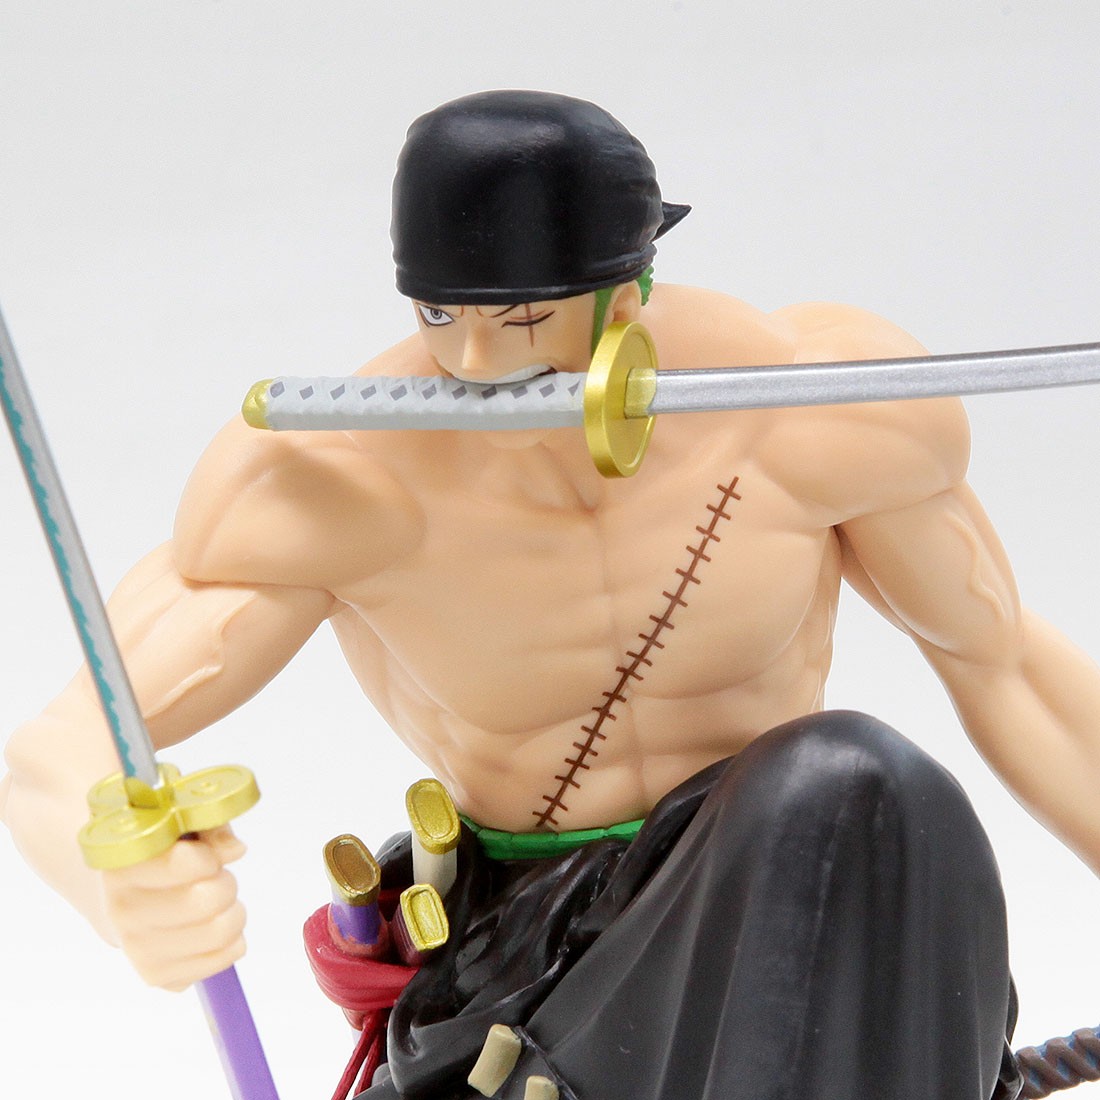 One Piece - Figurine Zoro Roronoa - Dioramatic